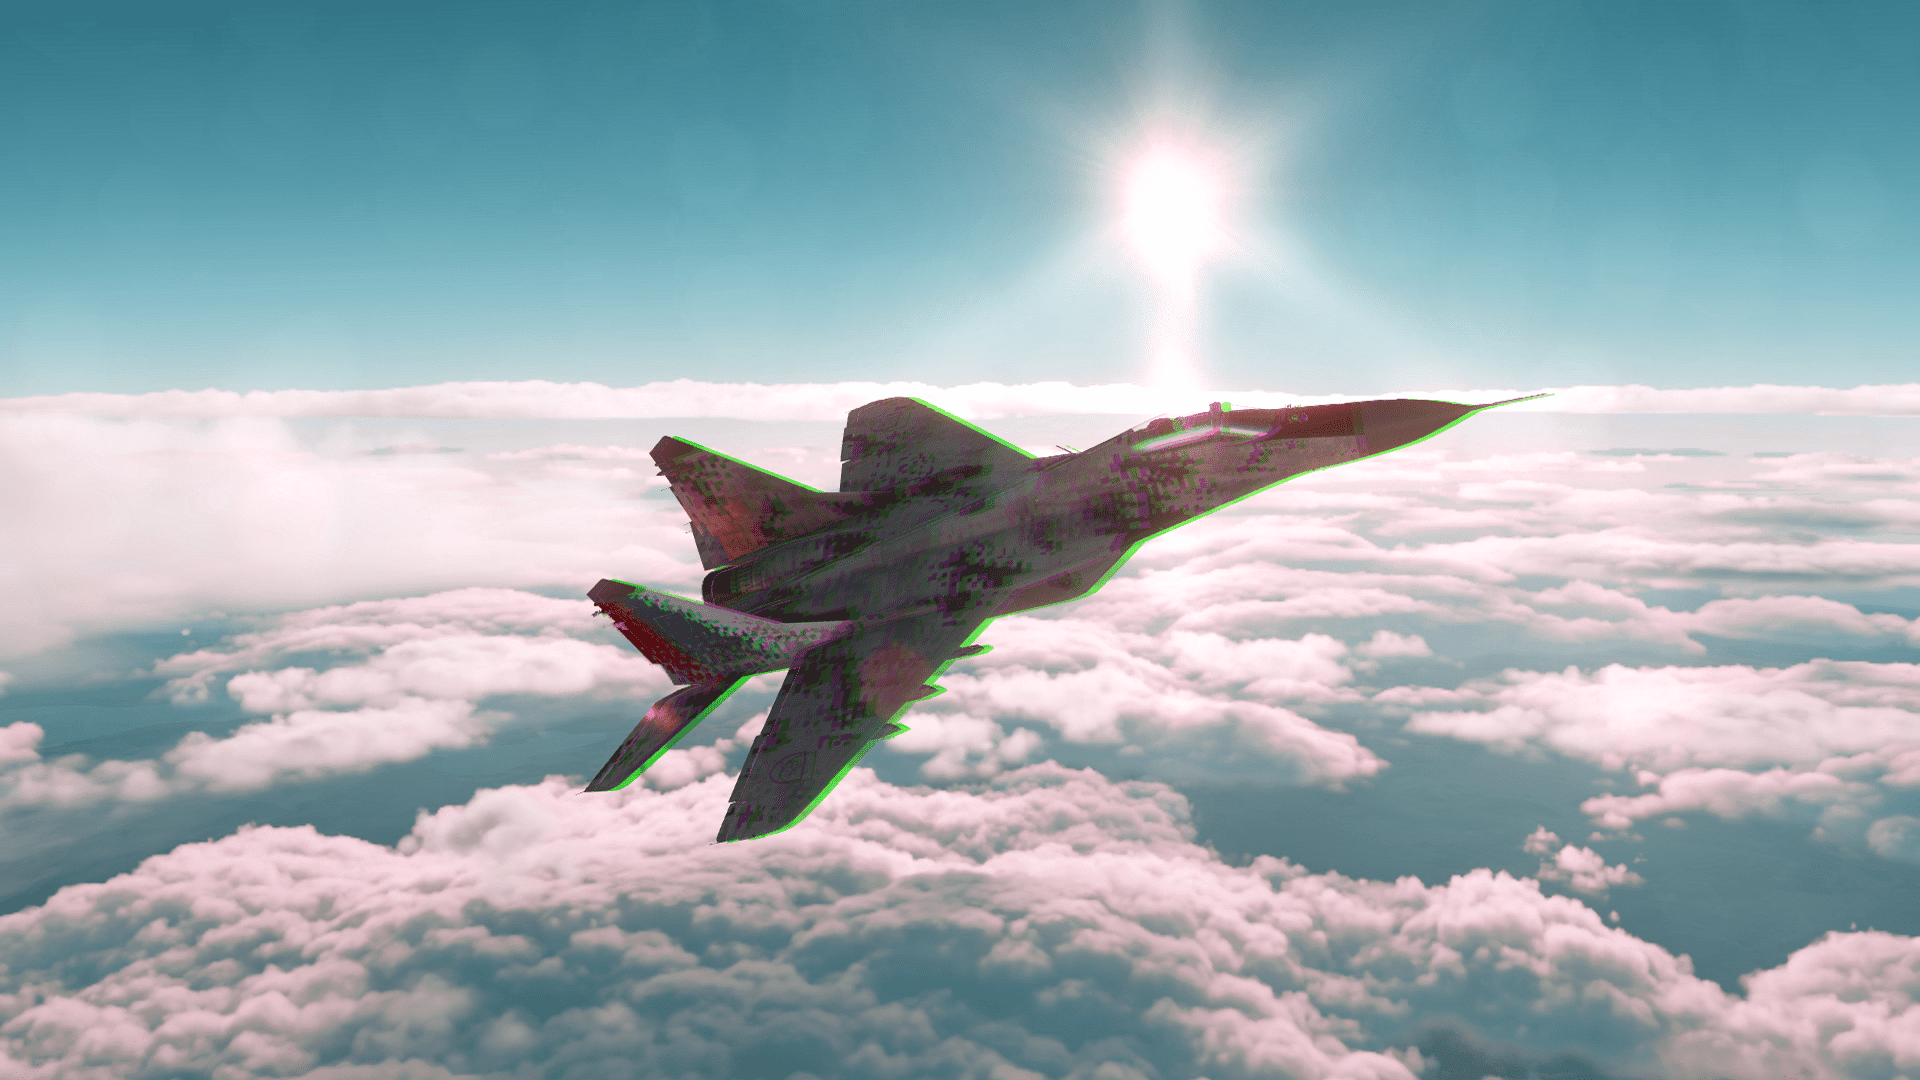 MiG-29 custom theme (vaporwave)